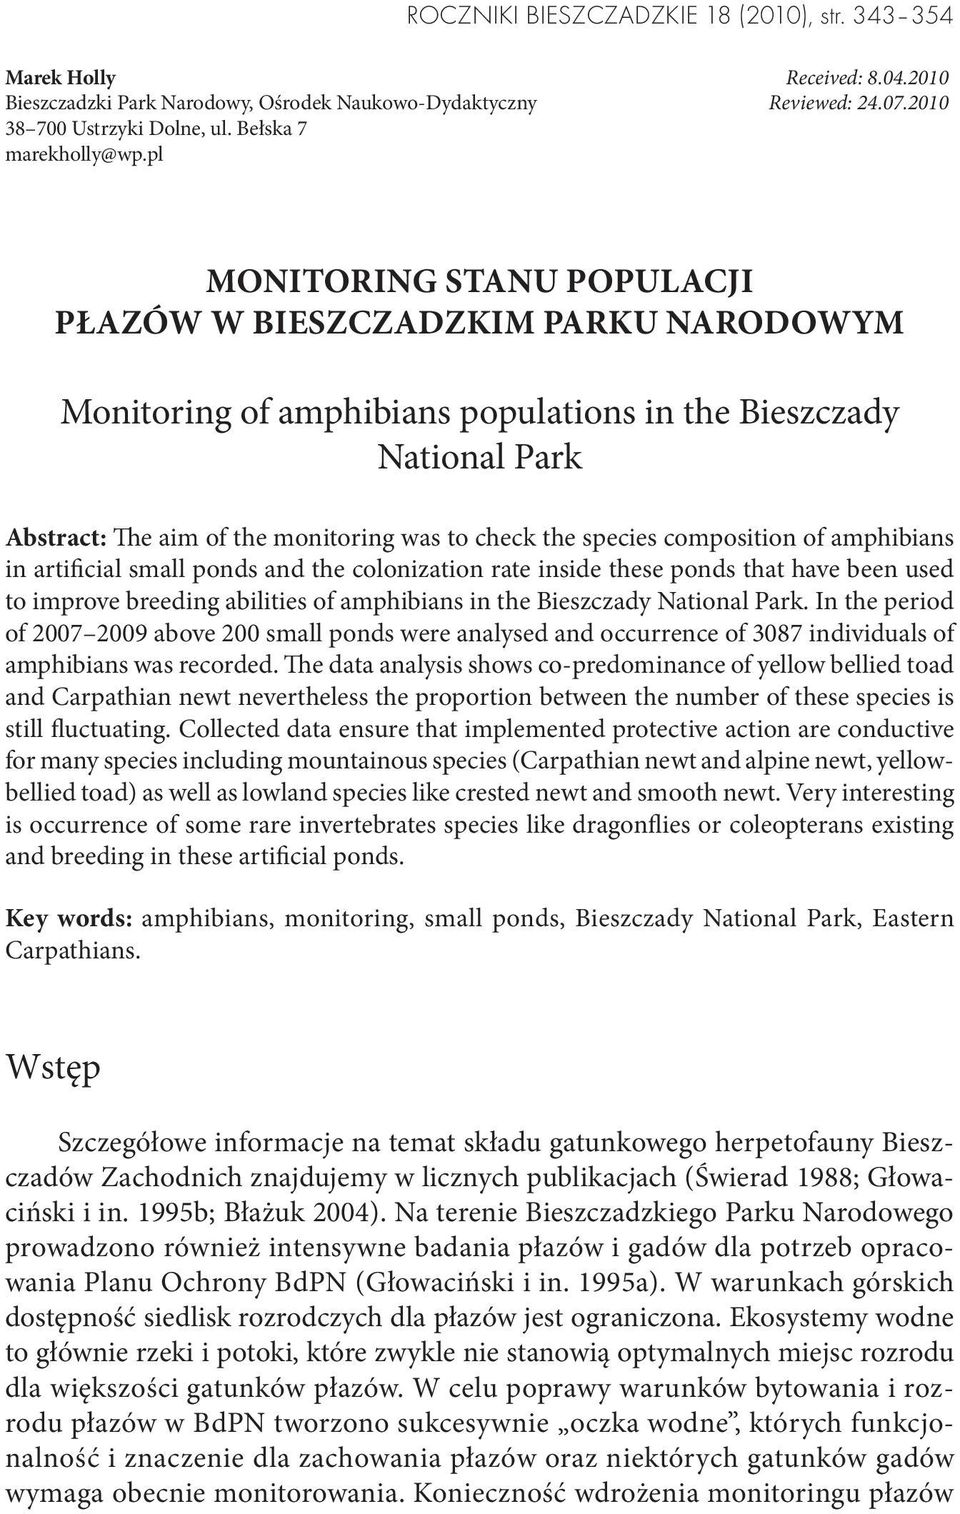 pl MONITORING STANU POPULACJI PŁAZÓW W BIESZCZADZKIM PARKU NARODOWYM Monitoring of amphibians populations in the Bieszczady National Park Abstract: The aim of the monitoring was to check the species